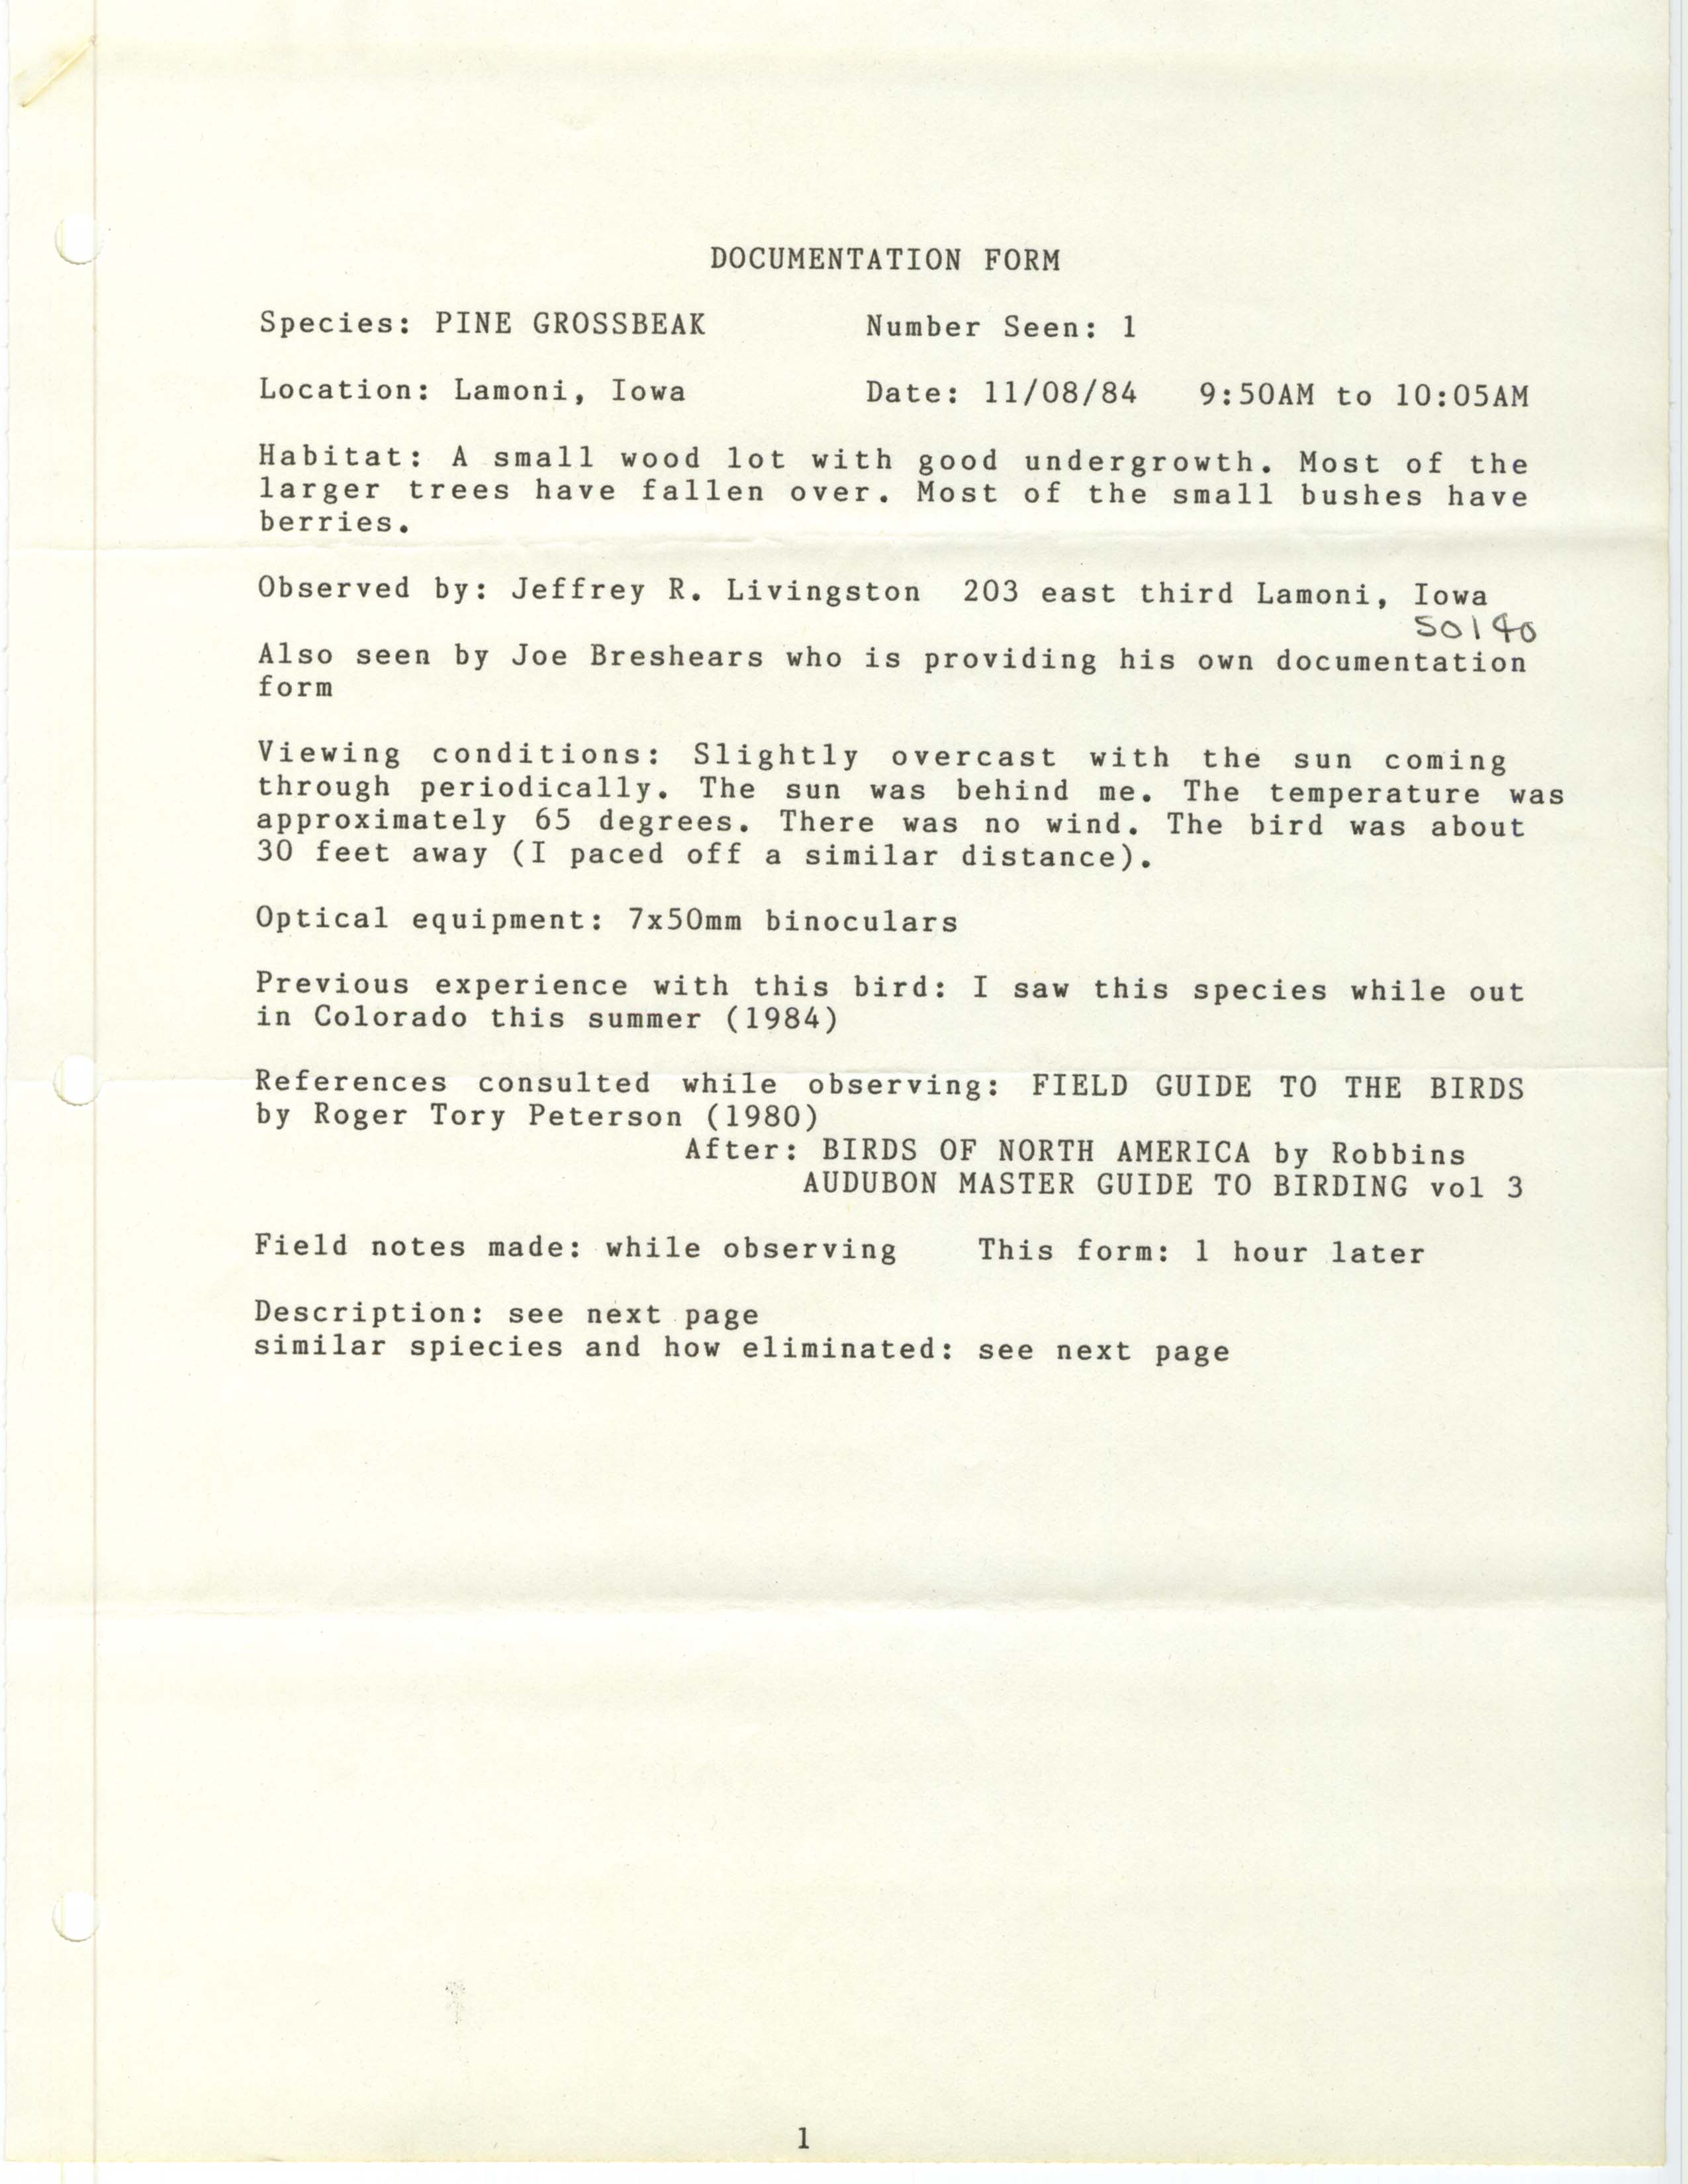 Rare bird documentation form for Pine Grosbeak at Lamoni, 1984